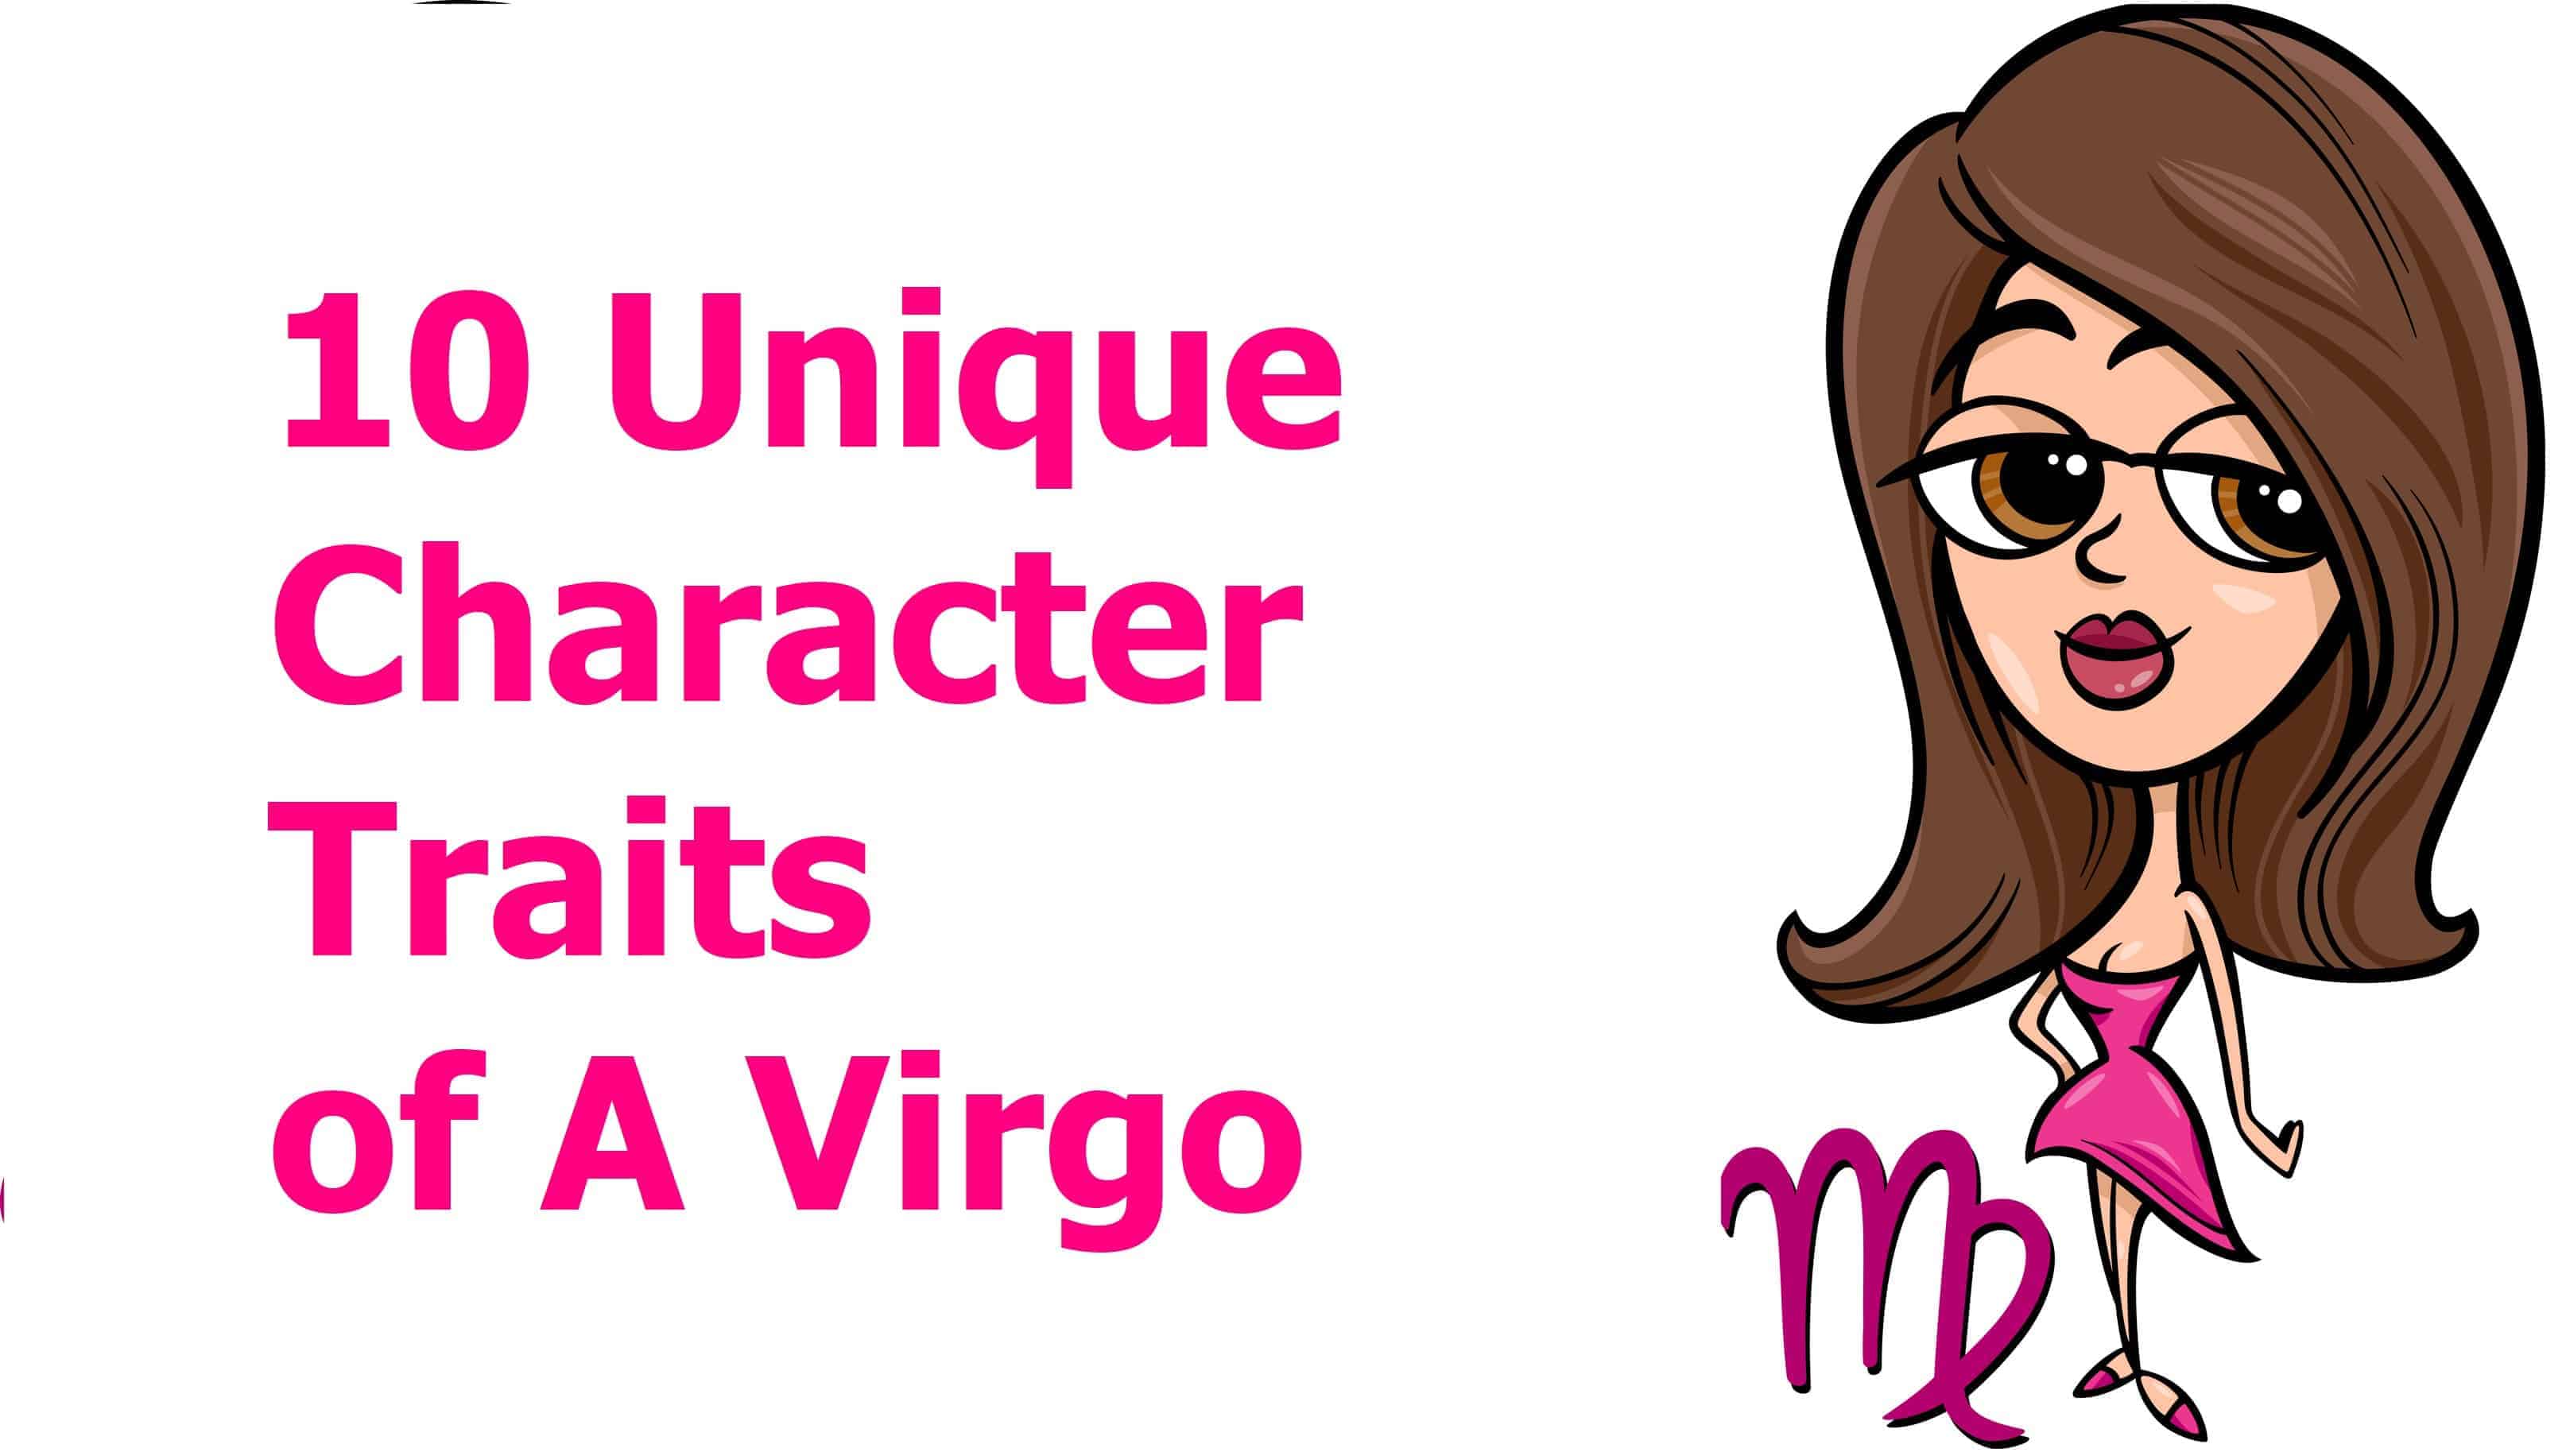 10 Unique Character Traits of A Virgo